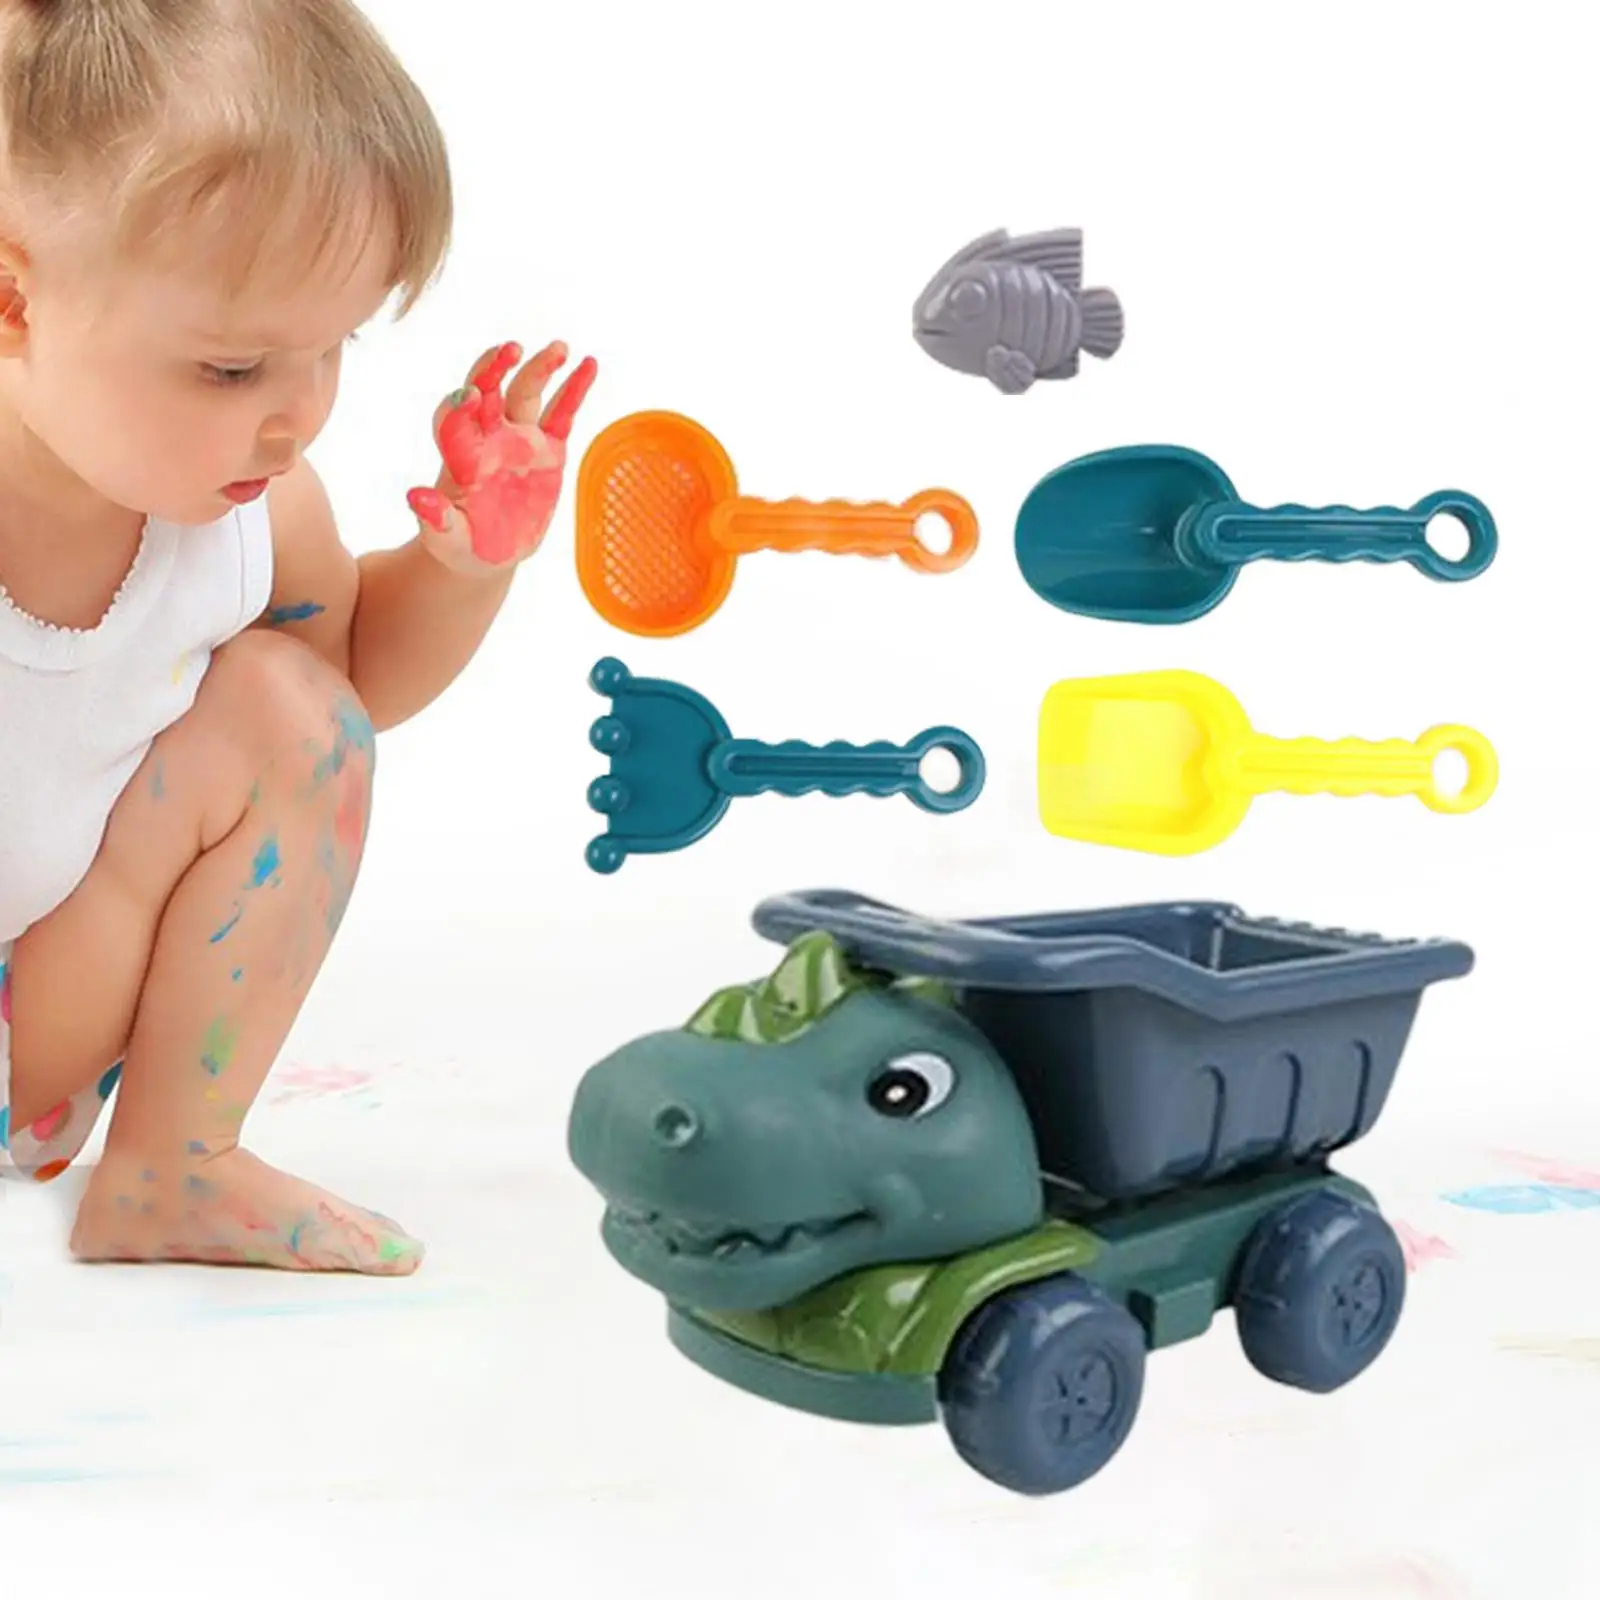 Kids Dinosaur Truck Sand Beach Toy Play Vehicle for Outdoor Activity Kids Children Age 2-6 Baby Toddler